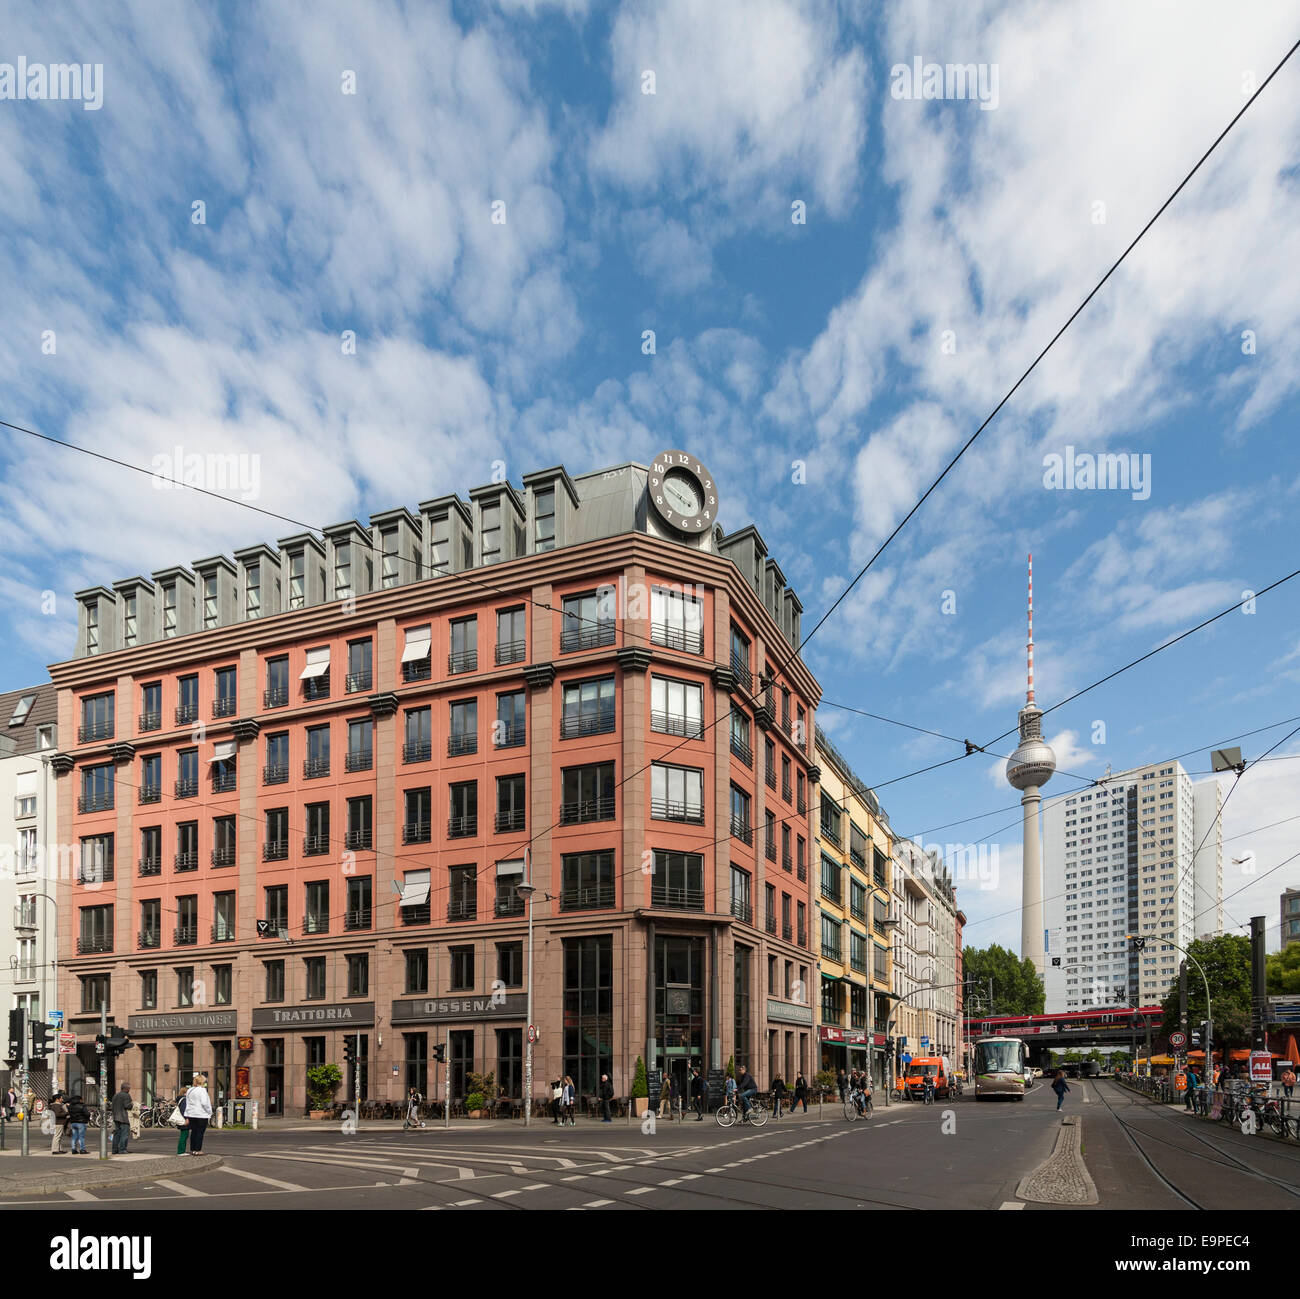 Hackescher markt berlin hi-res stock photography and images - Alamy